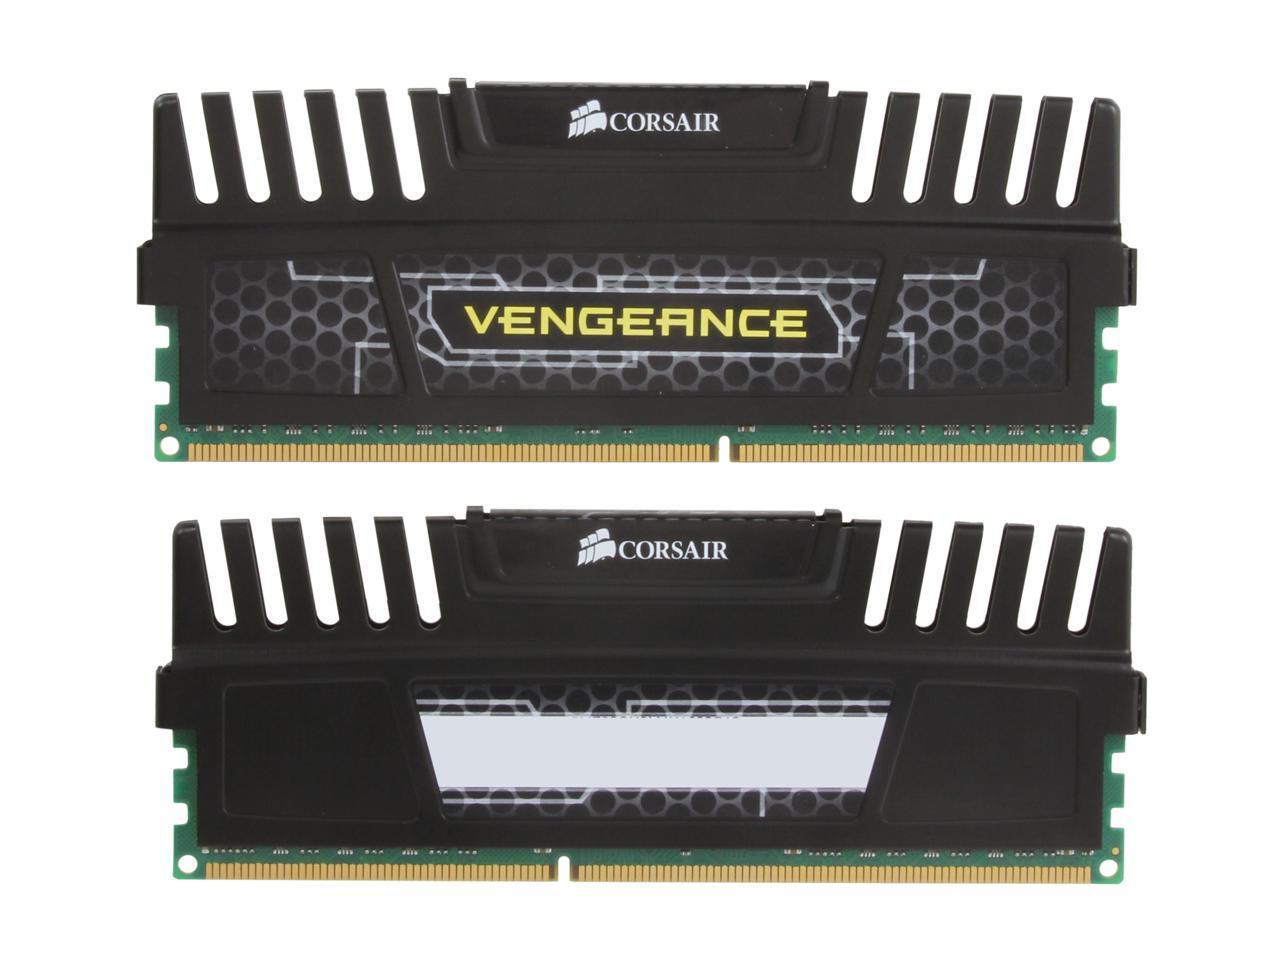 CORSAIR Vengeance 32GB (4 x 8GB) DDR3 1600 (PC3 12800) Desktop Memory Model  CMZ32GX3M4X1600C10